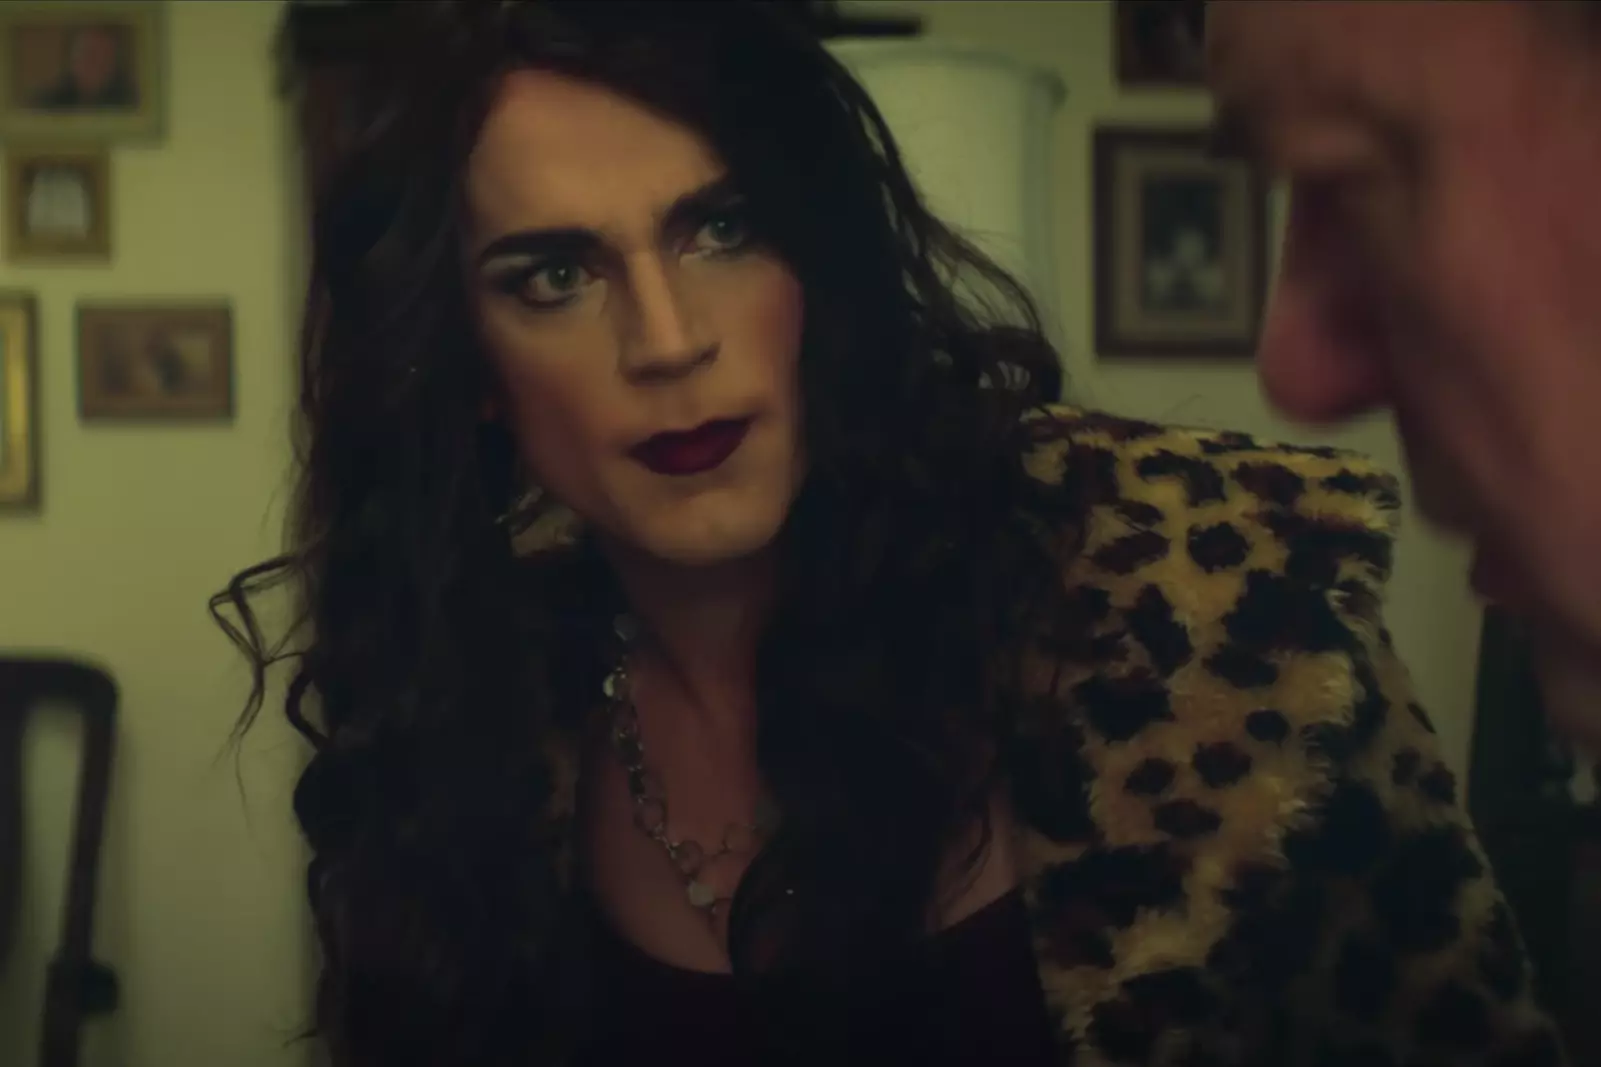 Matt Bomer Plays a Transgender Sex Worker in 'Anything' Trailer